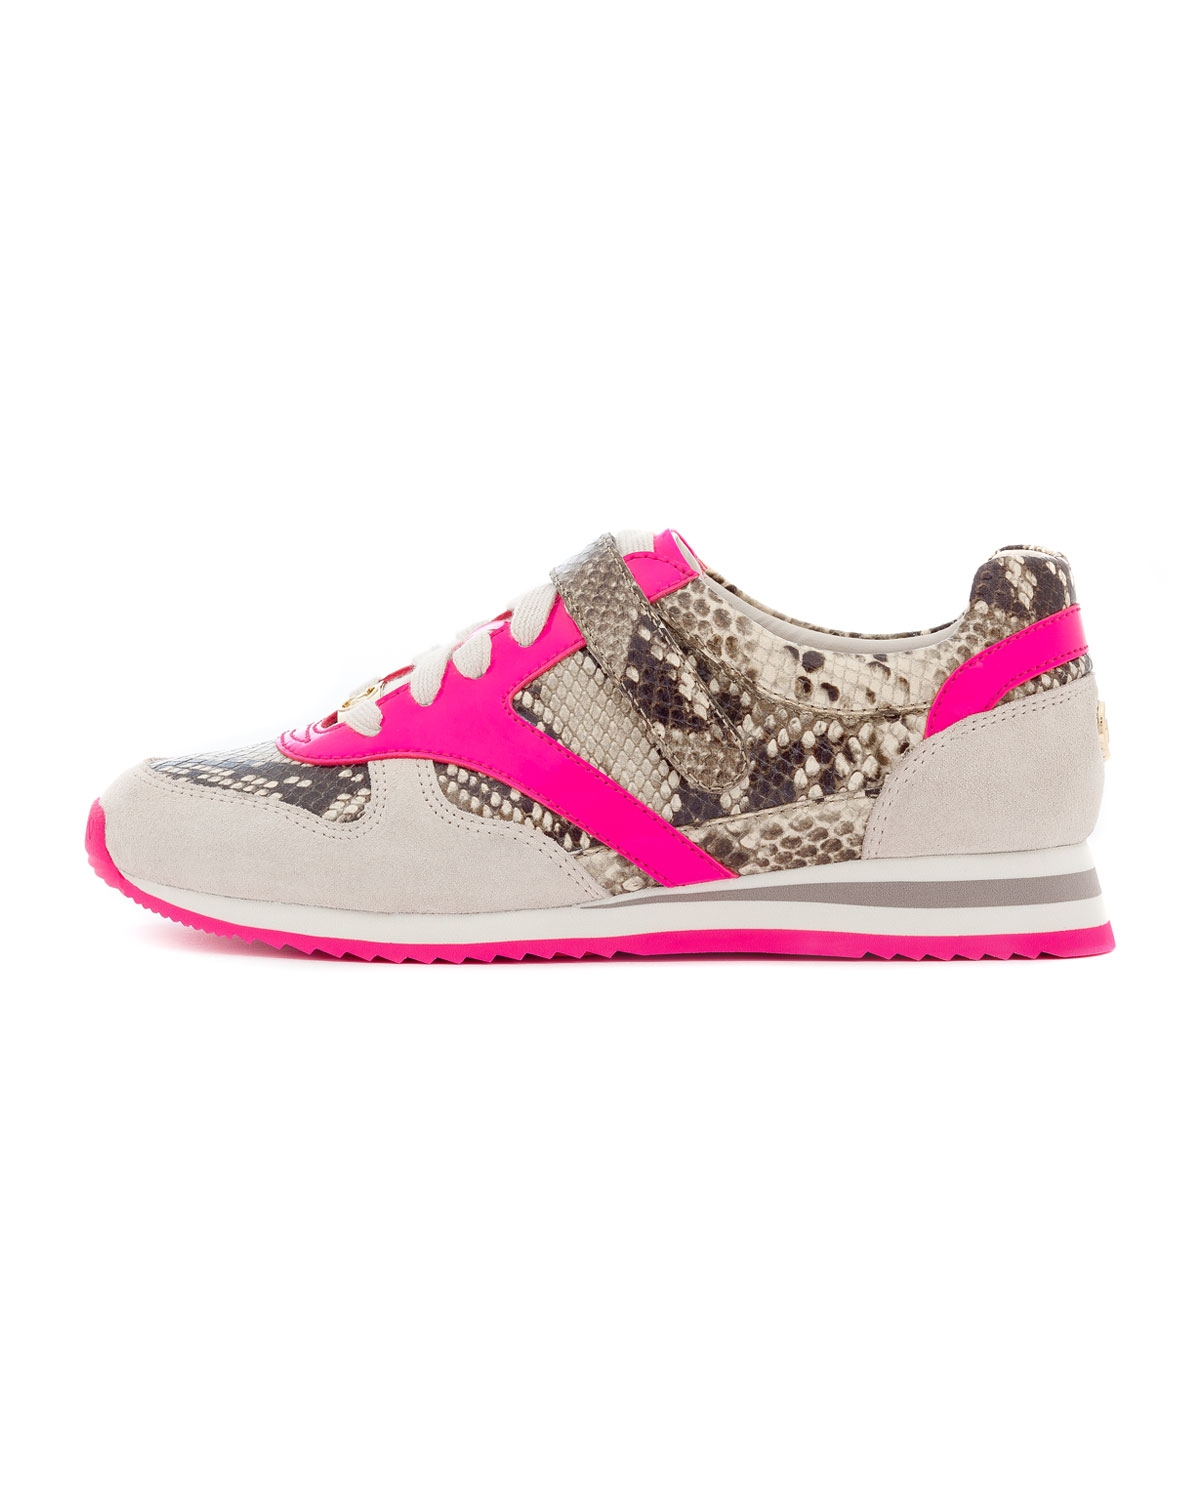 Michael Kors Neon Snakeprint Sneaker in Pink - Lyst